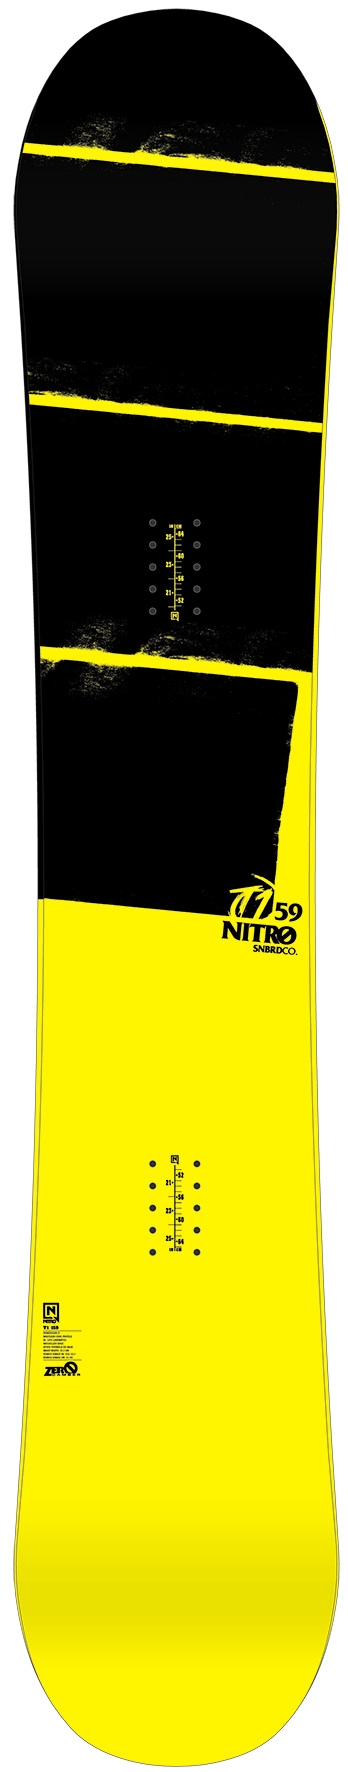 nitro t1